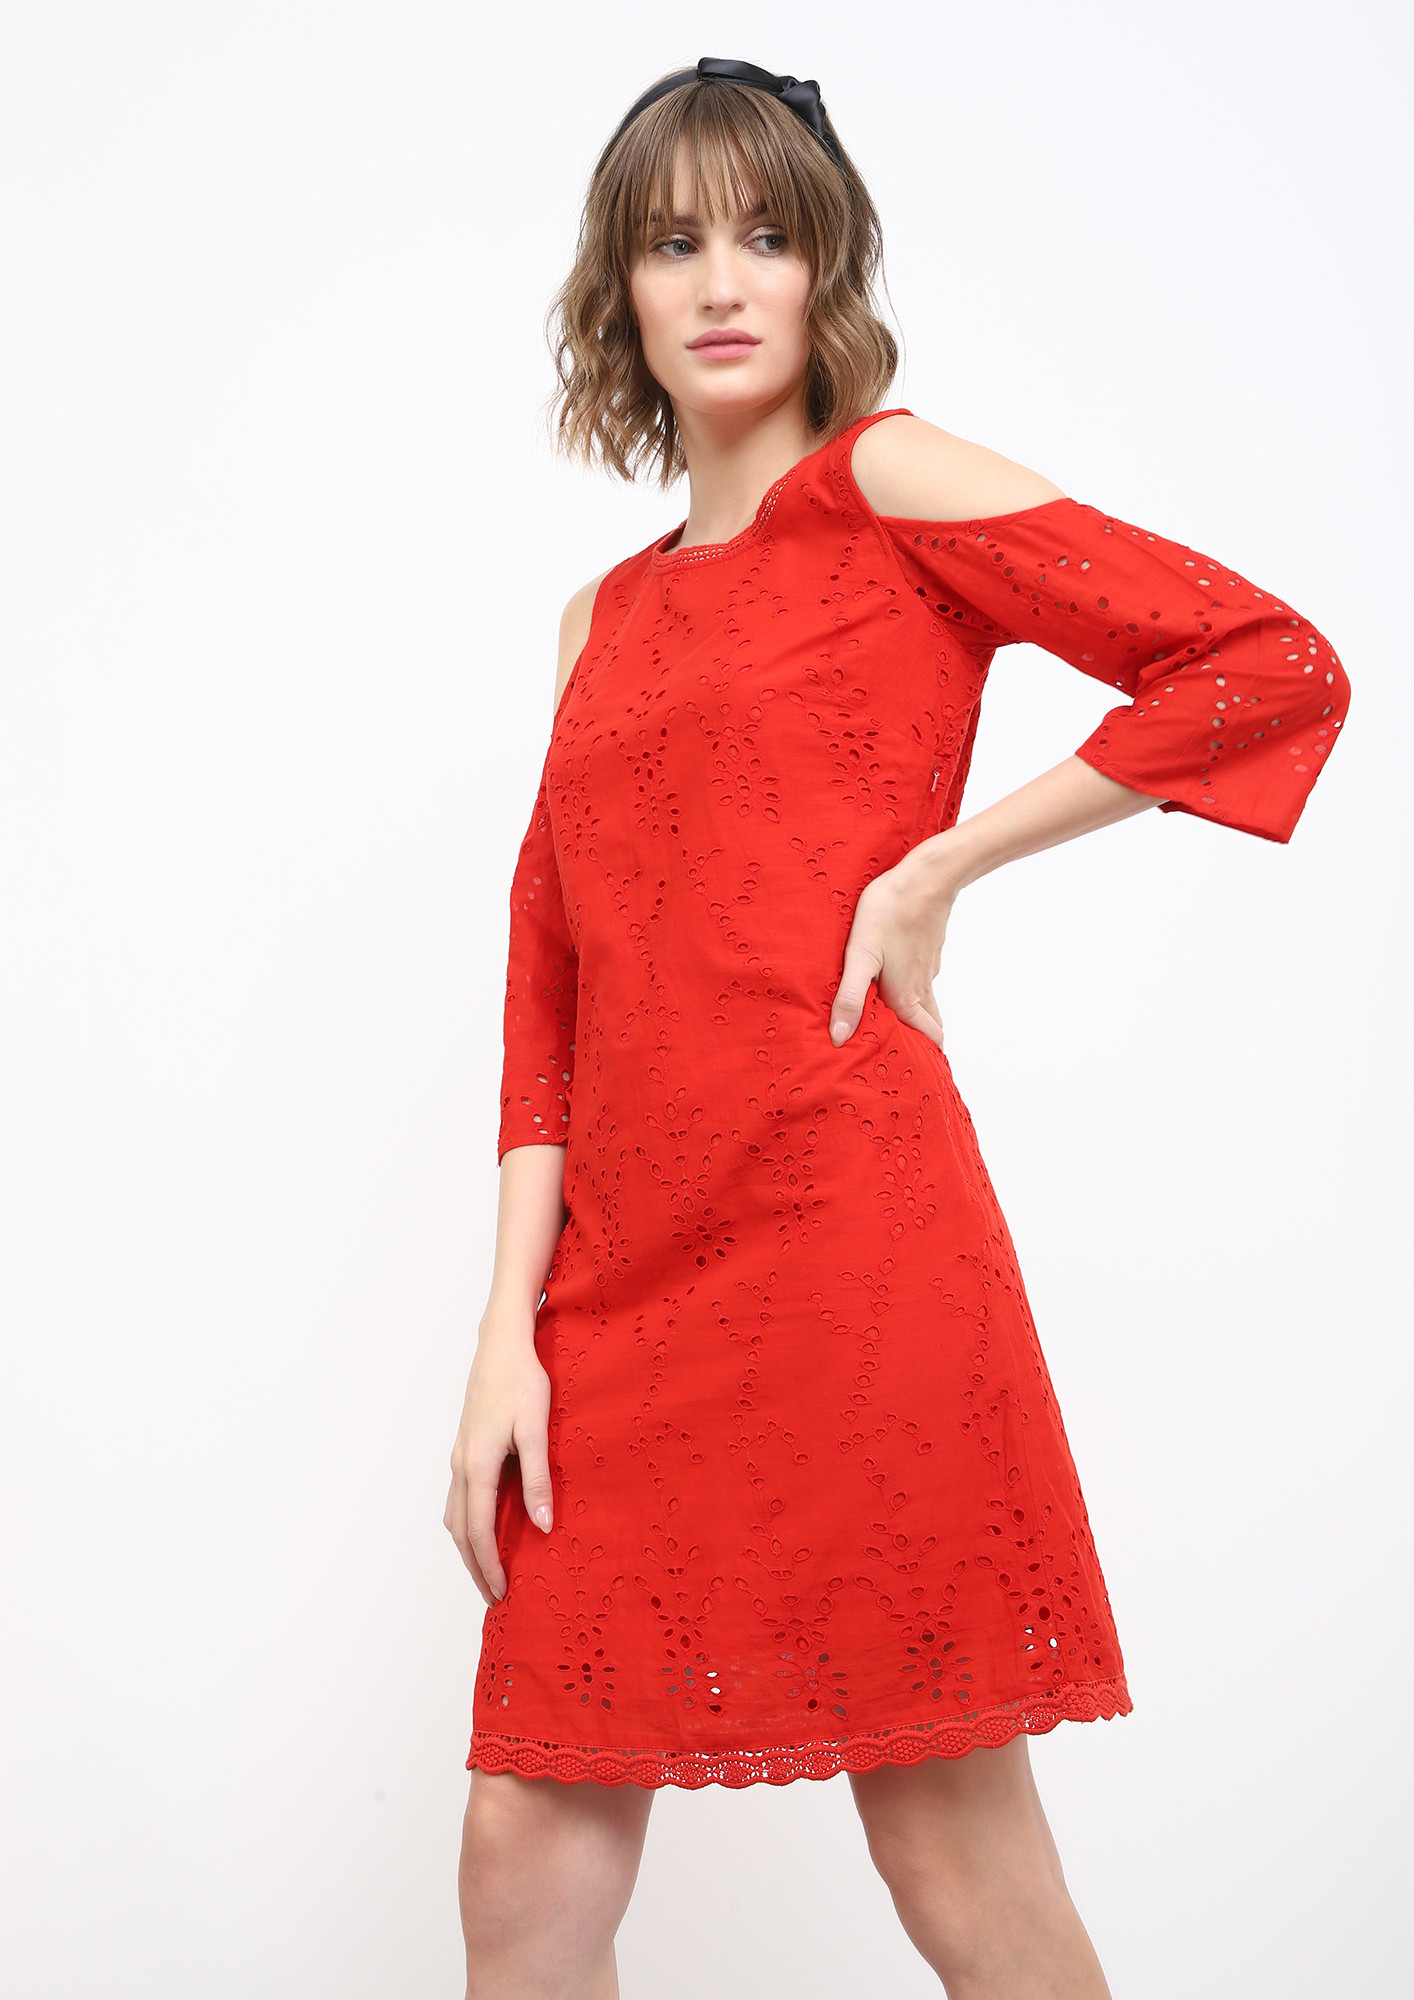 SASSY IN SCHIFFLI RED SHIFT DRESS